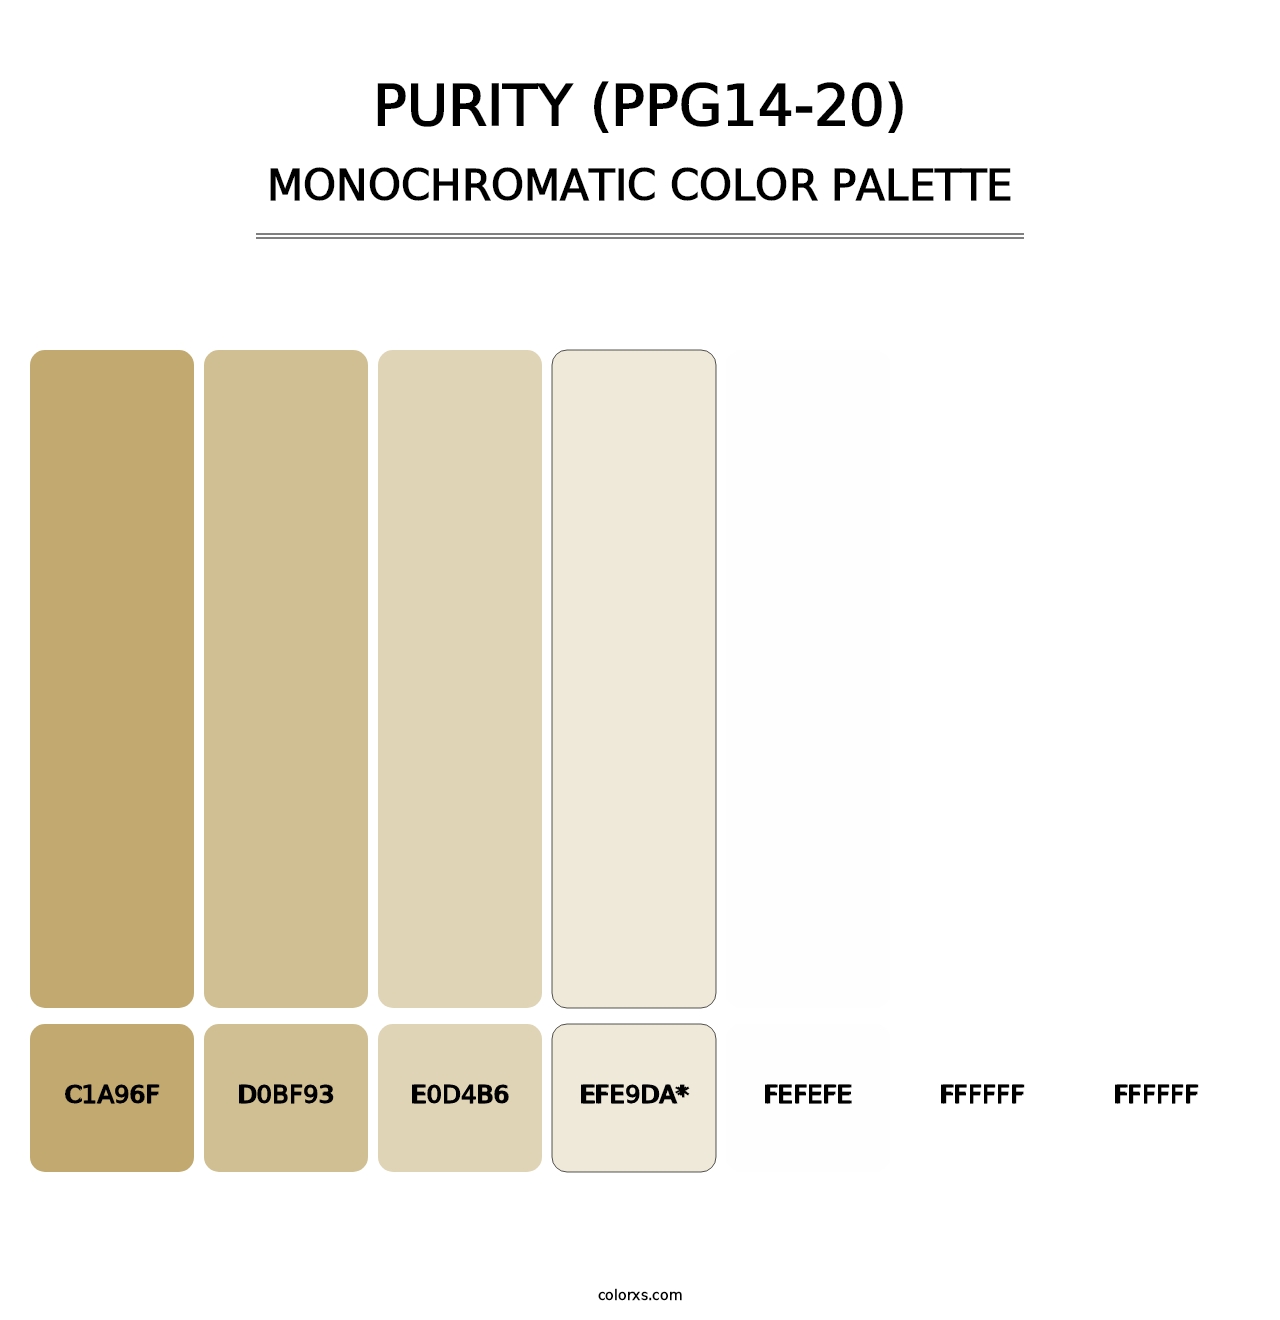 Purity (PPG14-20) - Monochromatic Color Palette